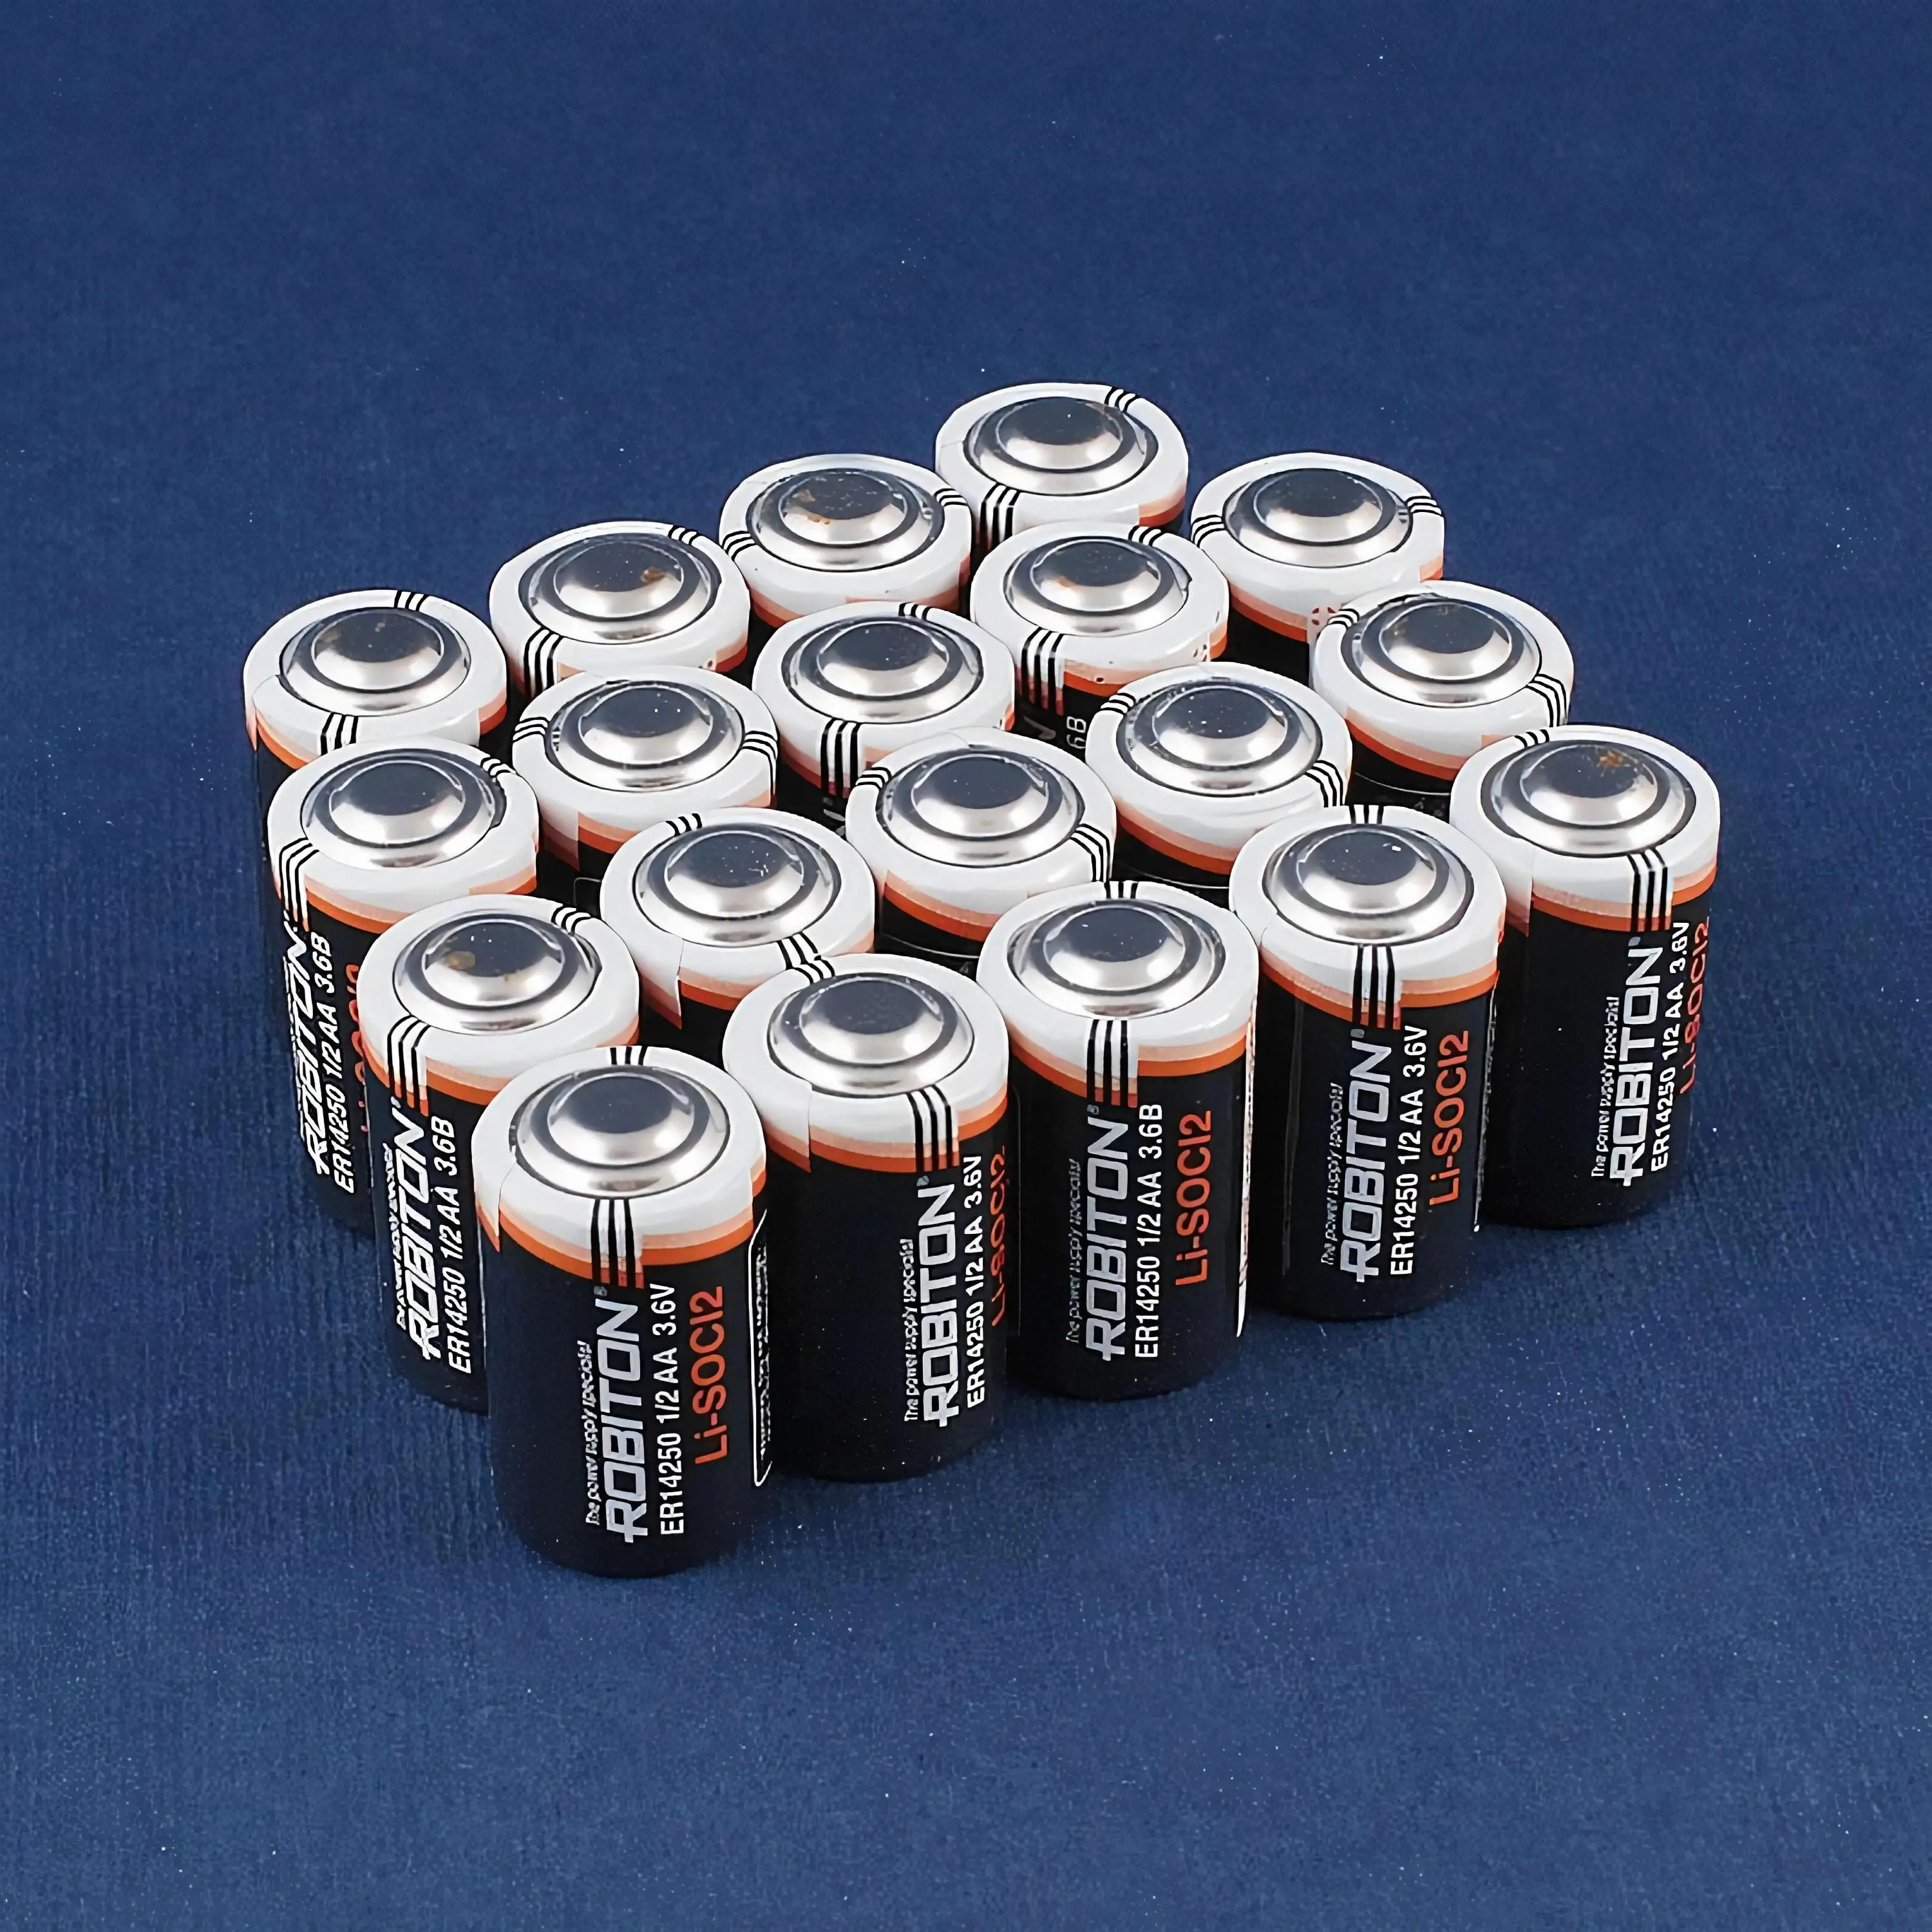 Батарейка battery. Батарейка er14250 3.6v Size 1/2 AA. Батарейки 2аа и 3аа. Батарейка 1/2 AA ДНС. 2aa батарейка.